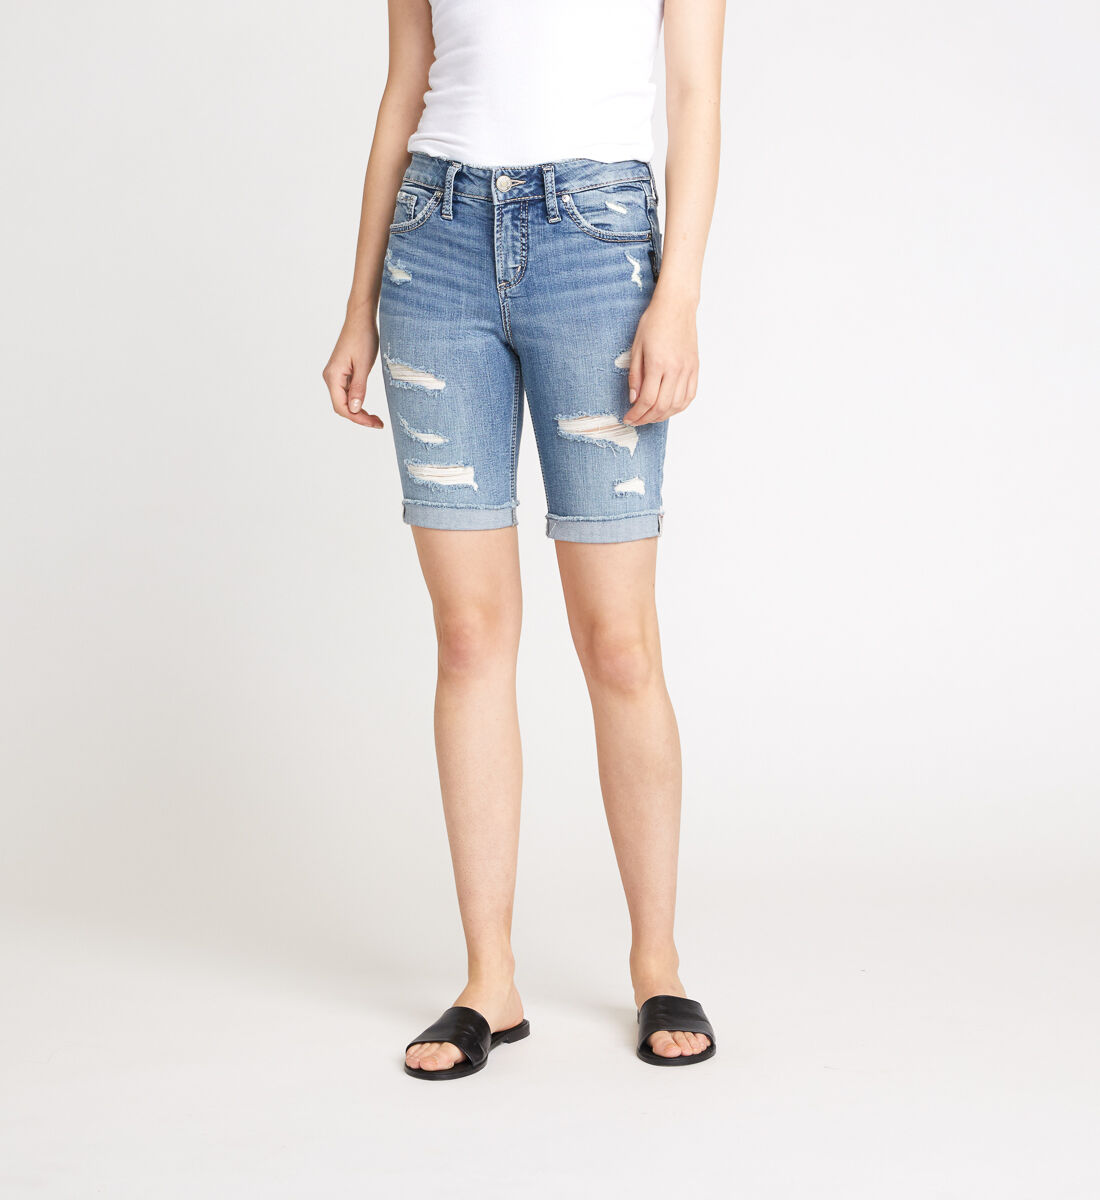 silver jean shorts canada